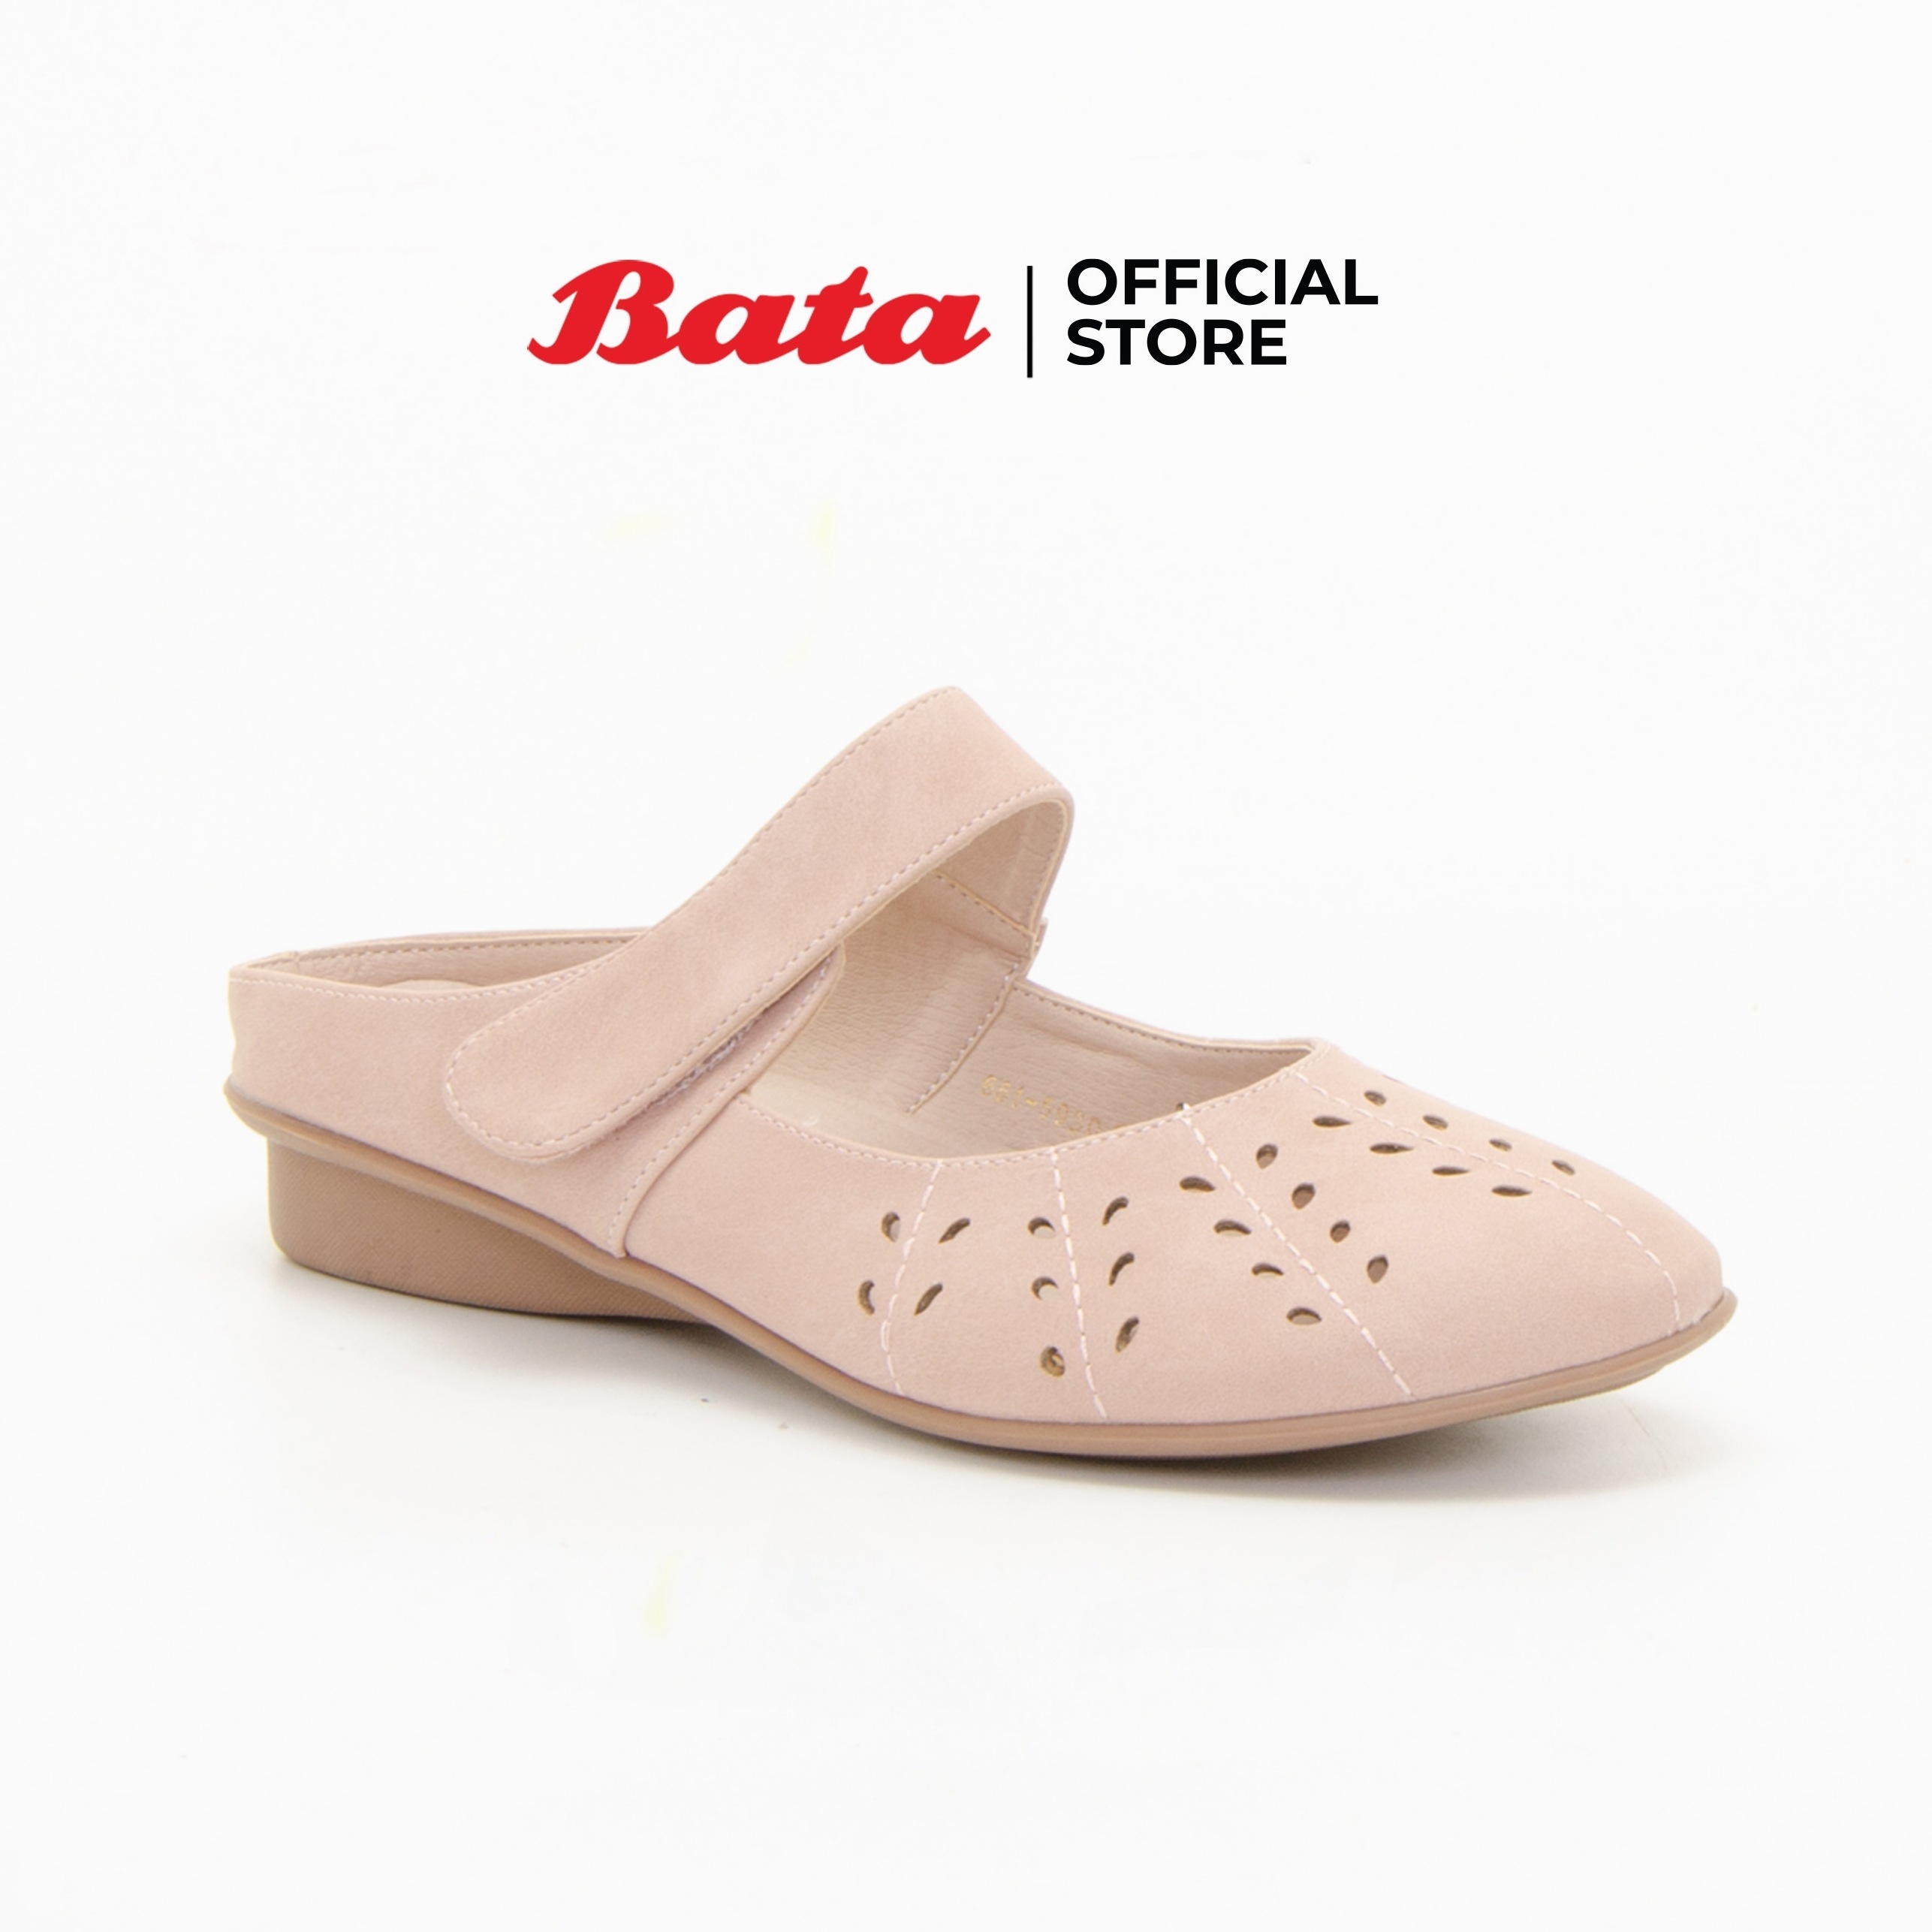 Bata Women's Mules Flats รองเท้าส้นแบนสำหรับผู้หญิง รุ่น Bon สีชมพู 6615930